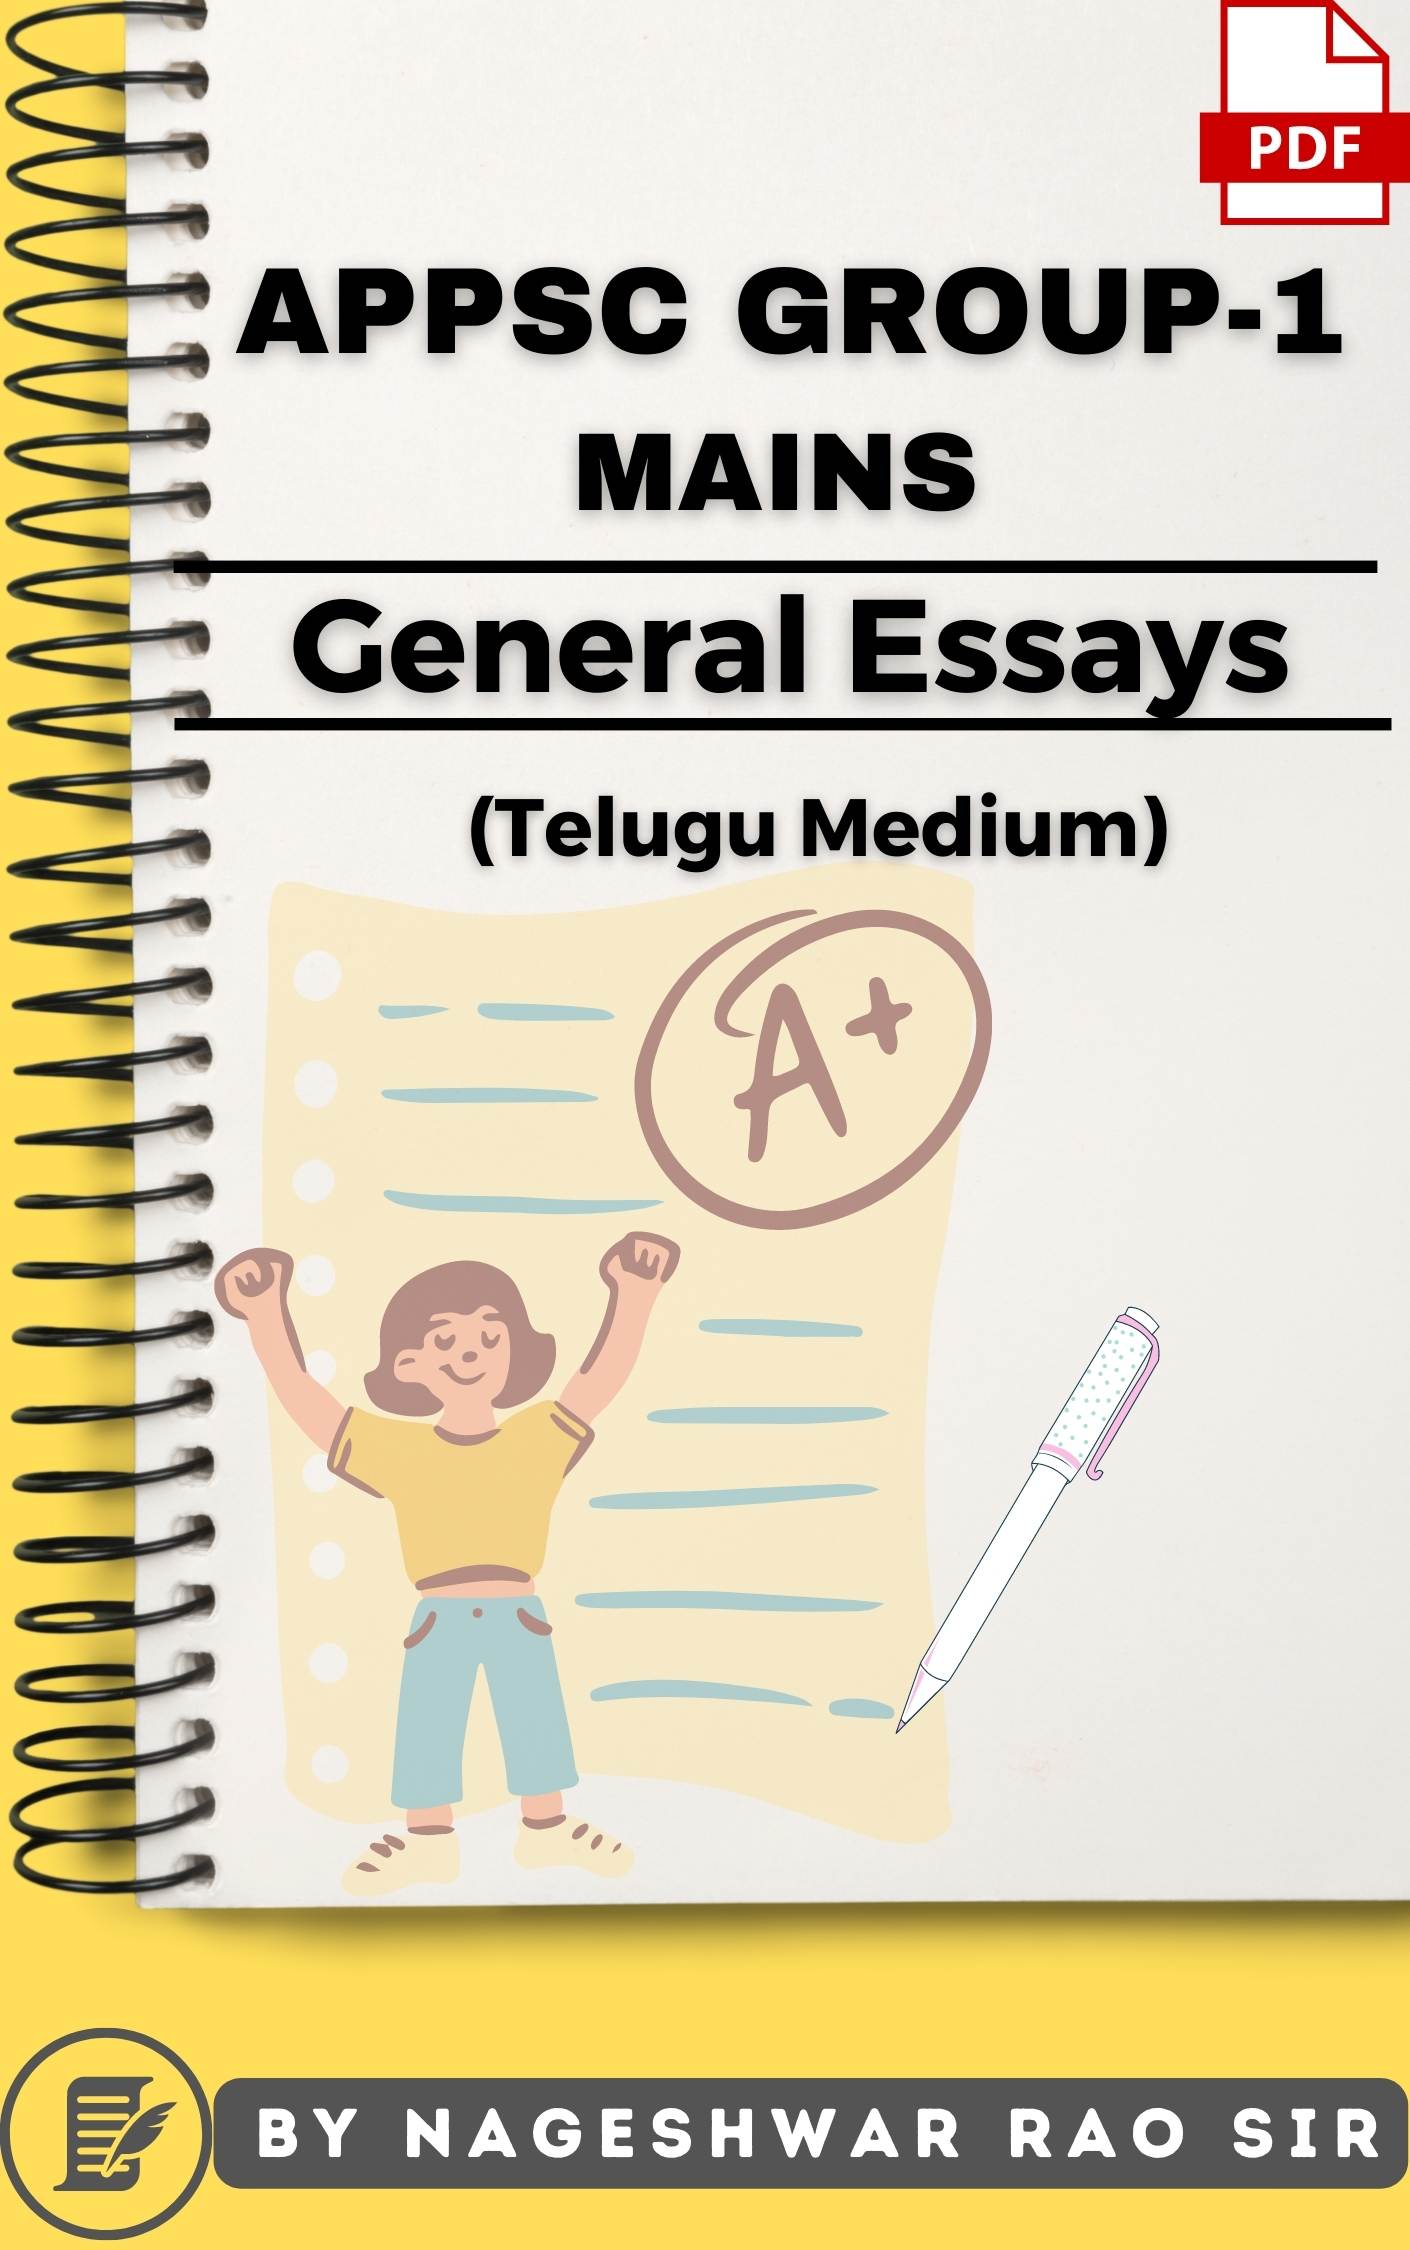 APPSC Group-1 Mains General Essays by Nageshwar Rao (Handwritten Class Notes- Telugu Medium)